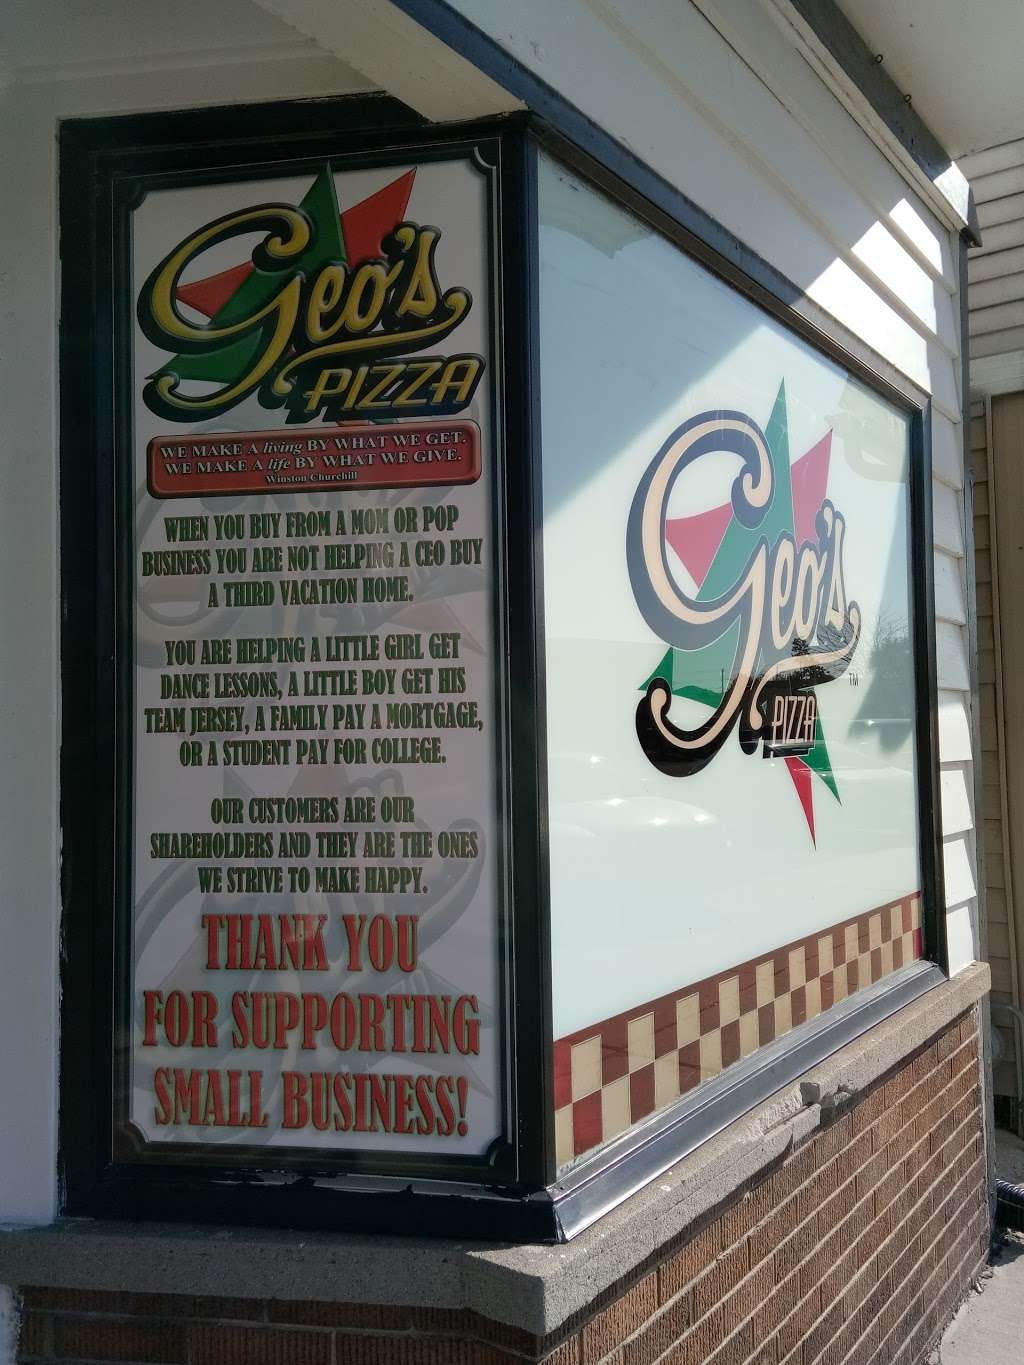 Geos Pizza | 715 S Broadway St, Coal City, IL 60416 | Phone: (815) 634-8858